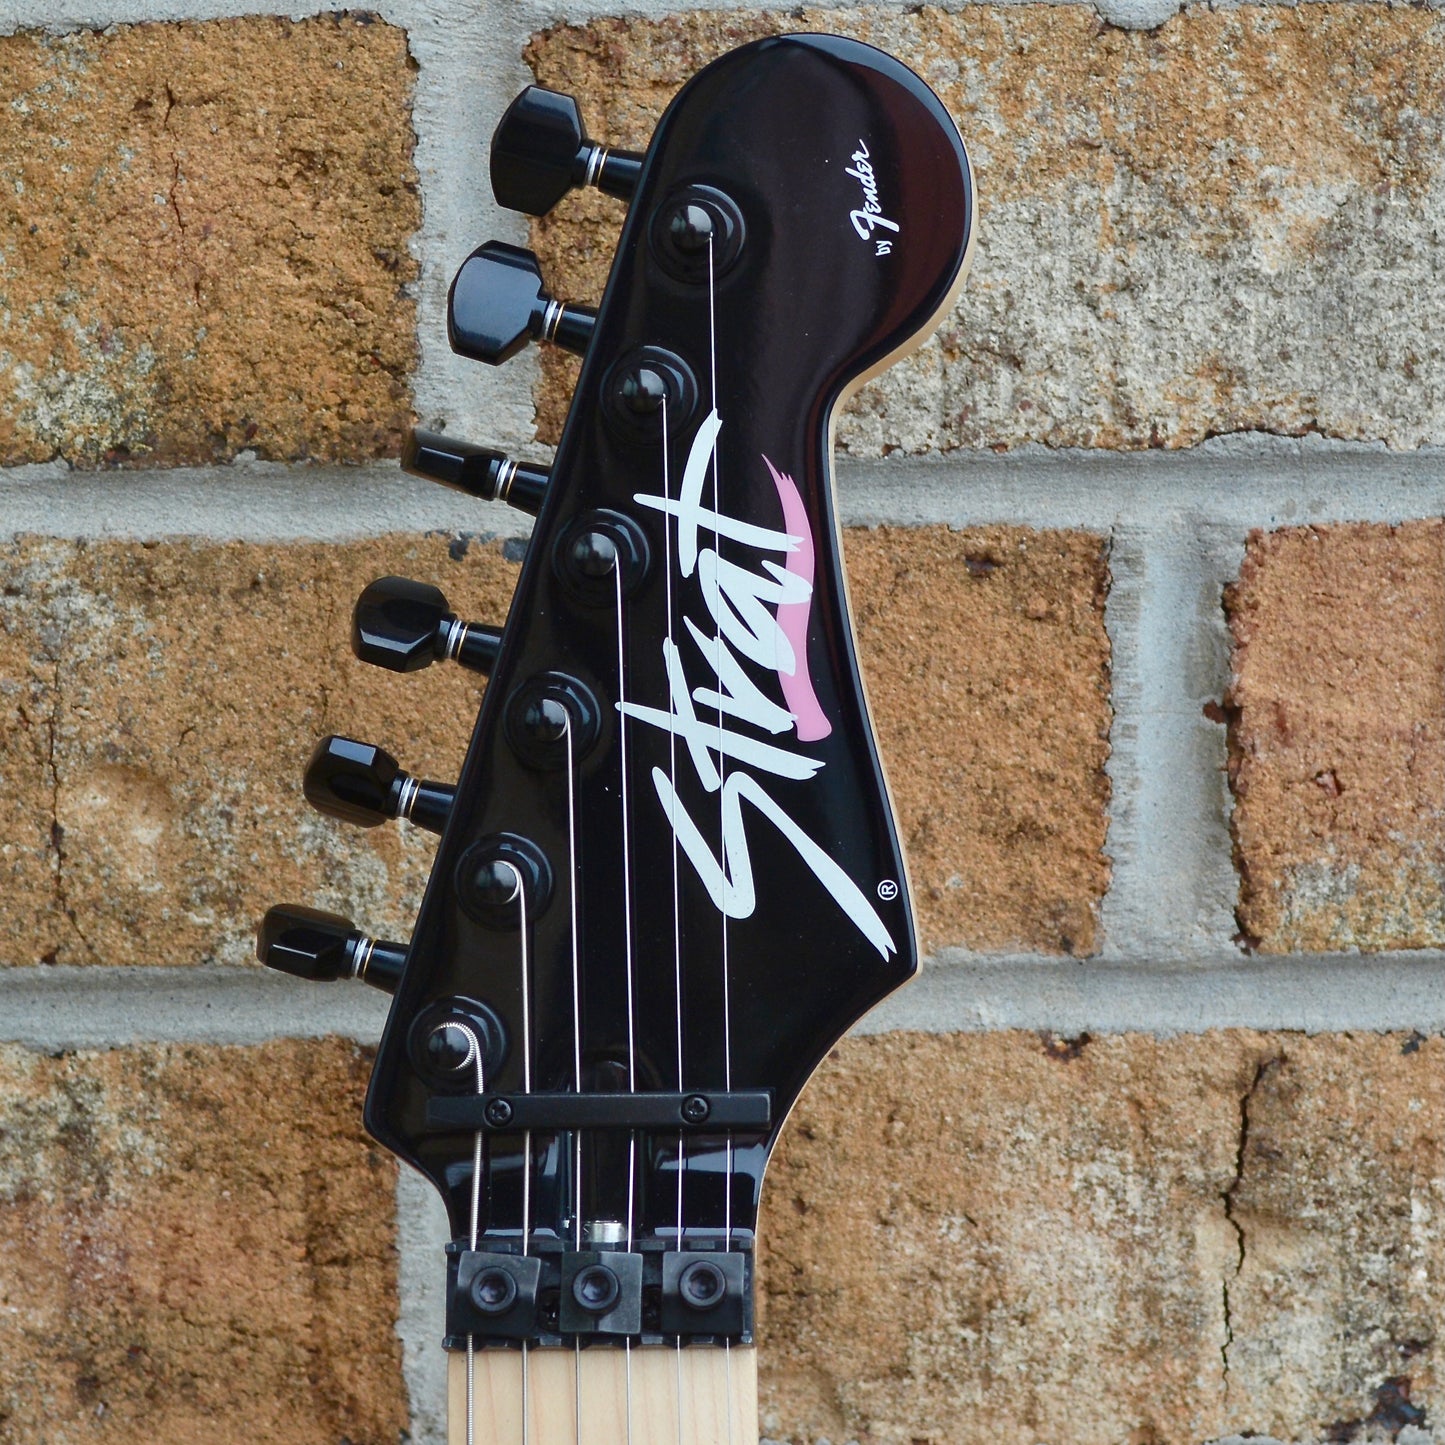 Fender Limited Edition HM Strat®, Maple Fingerboard, Flash Pink